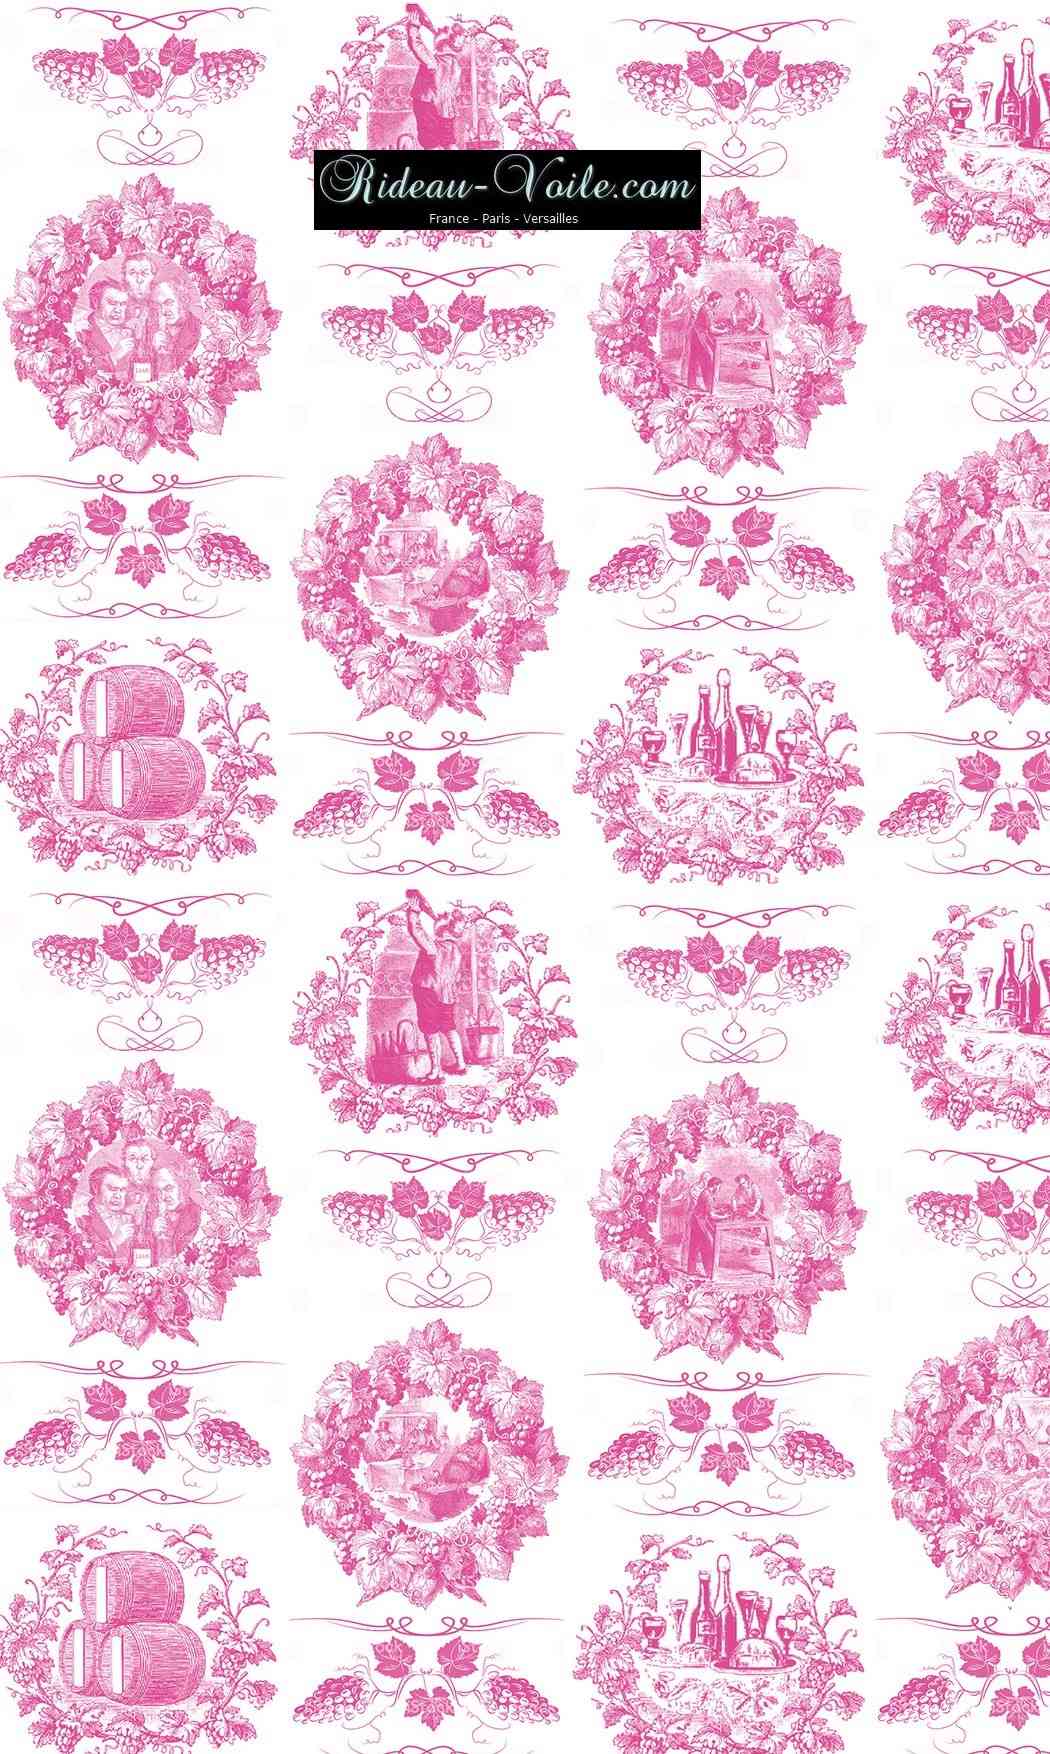 Toile de jouy tissu motif imprimé ameublement décoration tapisserie linge de maison housse coussin couette luxe lit fabric pattern printed home furnishing decoration tapestry linens cover cushion quilt luxury upholstery pink fushia rose